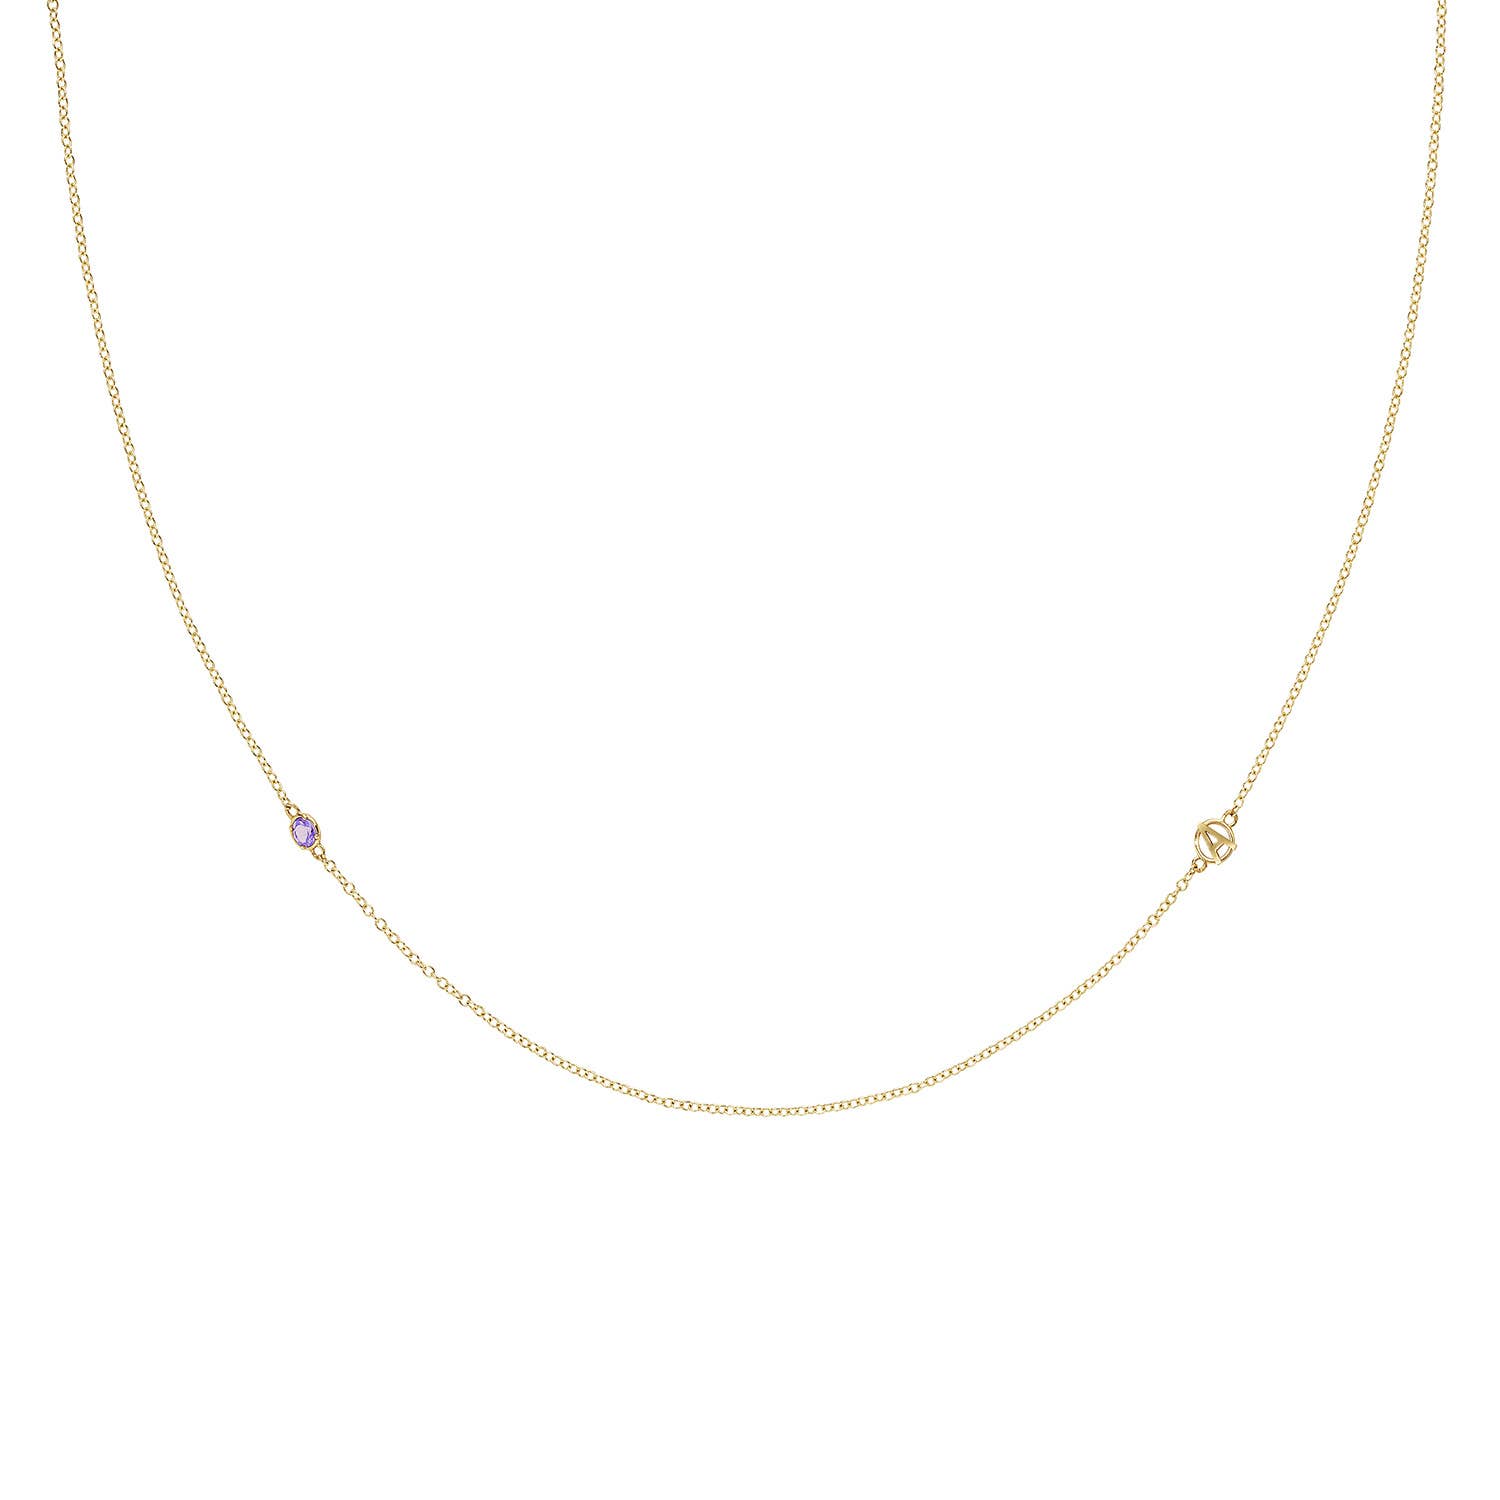 The Gemstone & Monogram Necklace w/ Amethyst